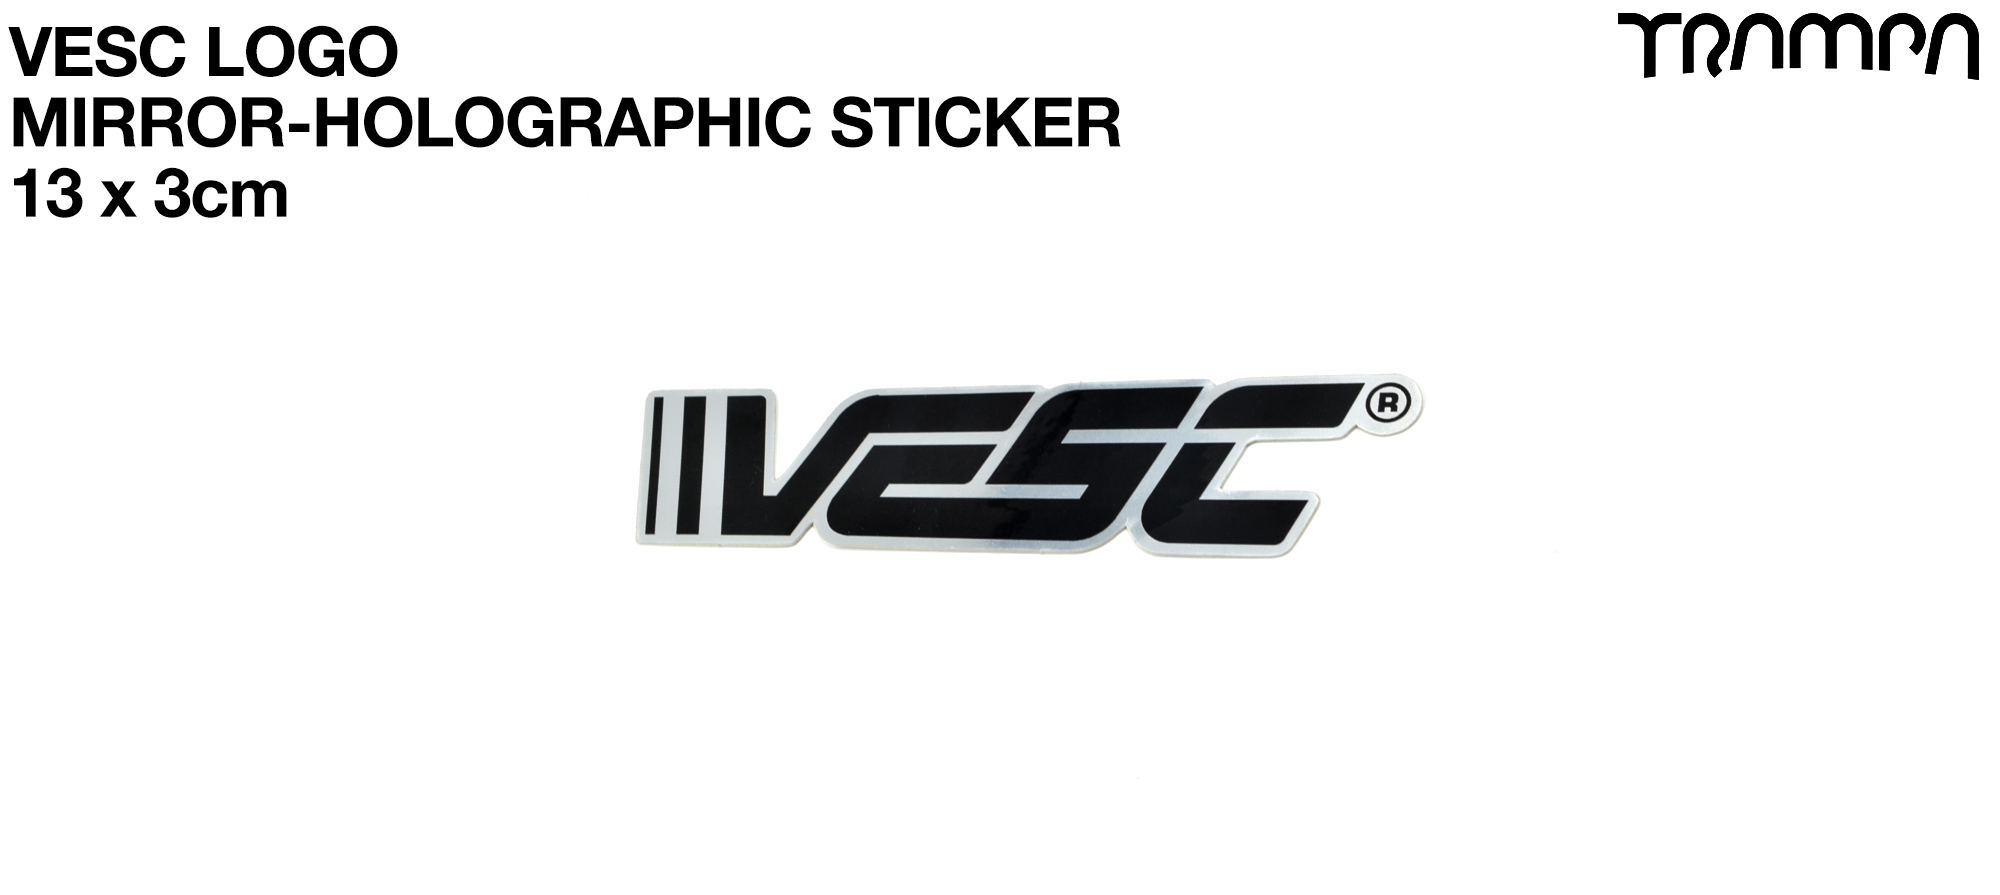 Please give me 4x Holographic VESC Sticker (+£3)